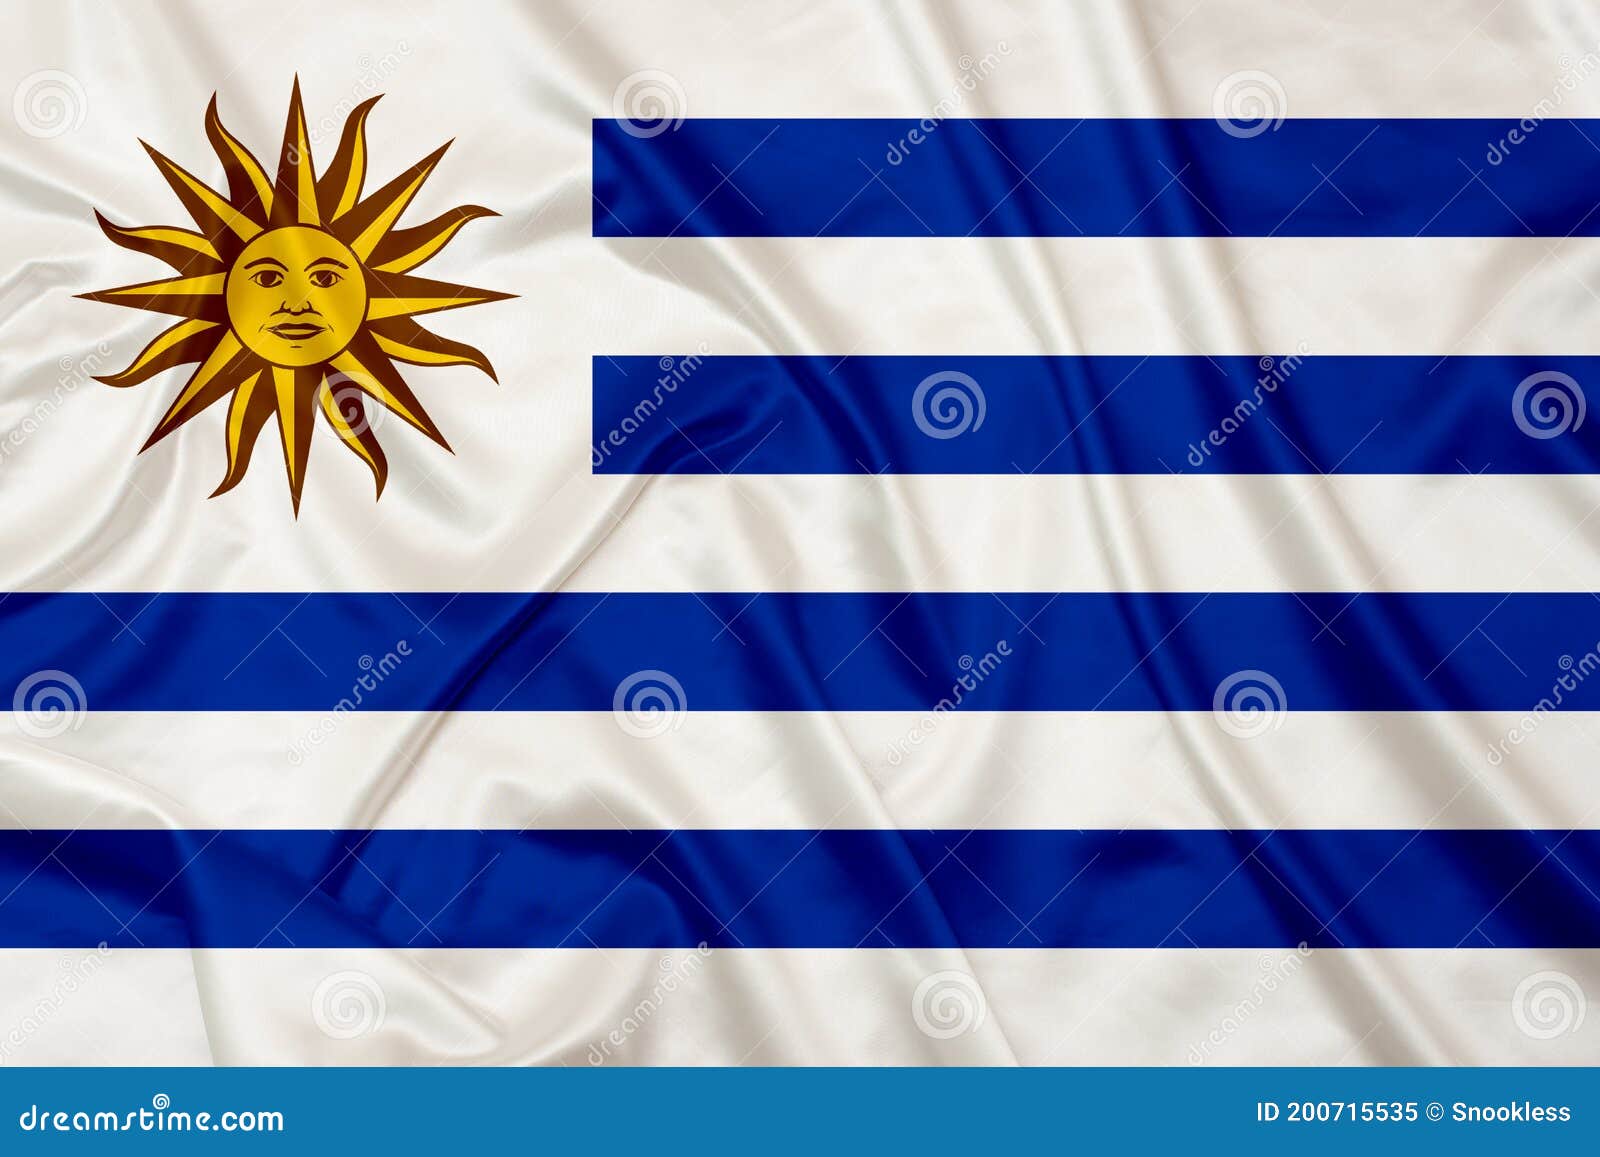 uruguay country silk flag